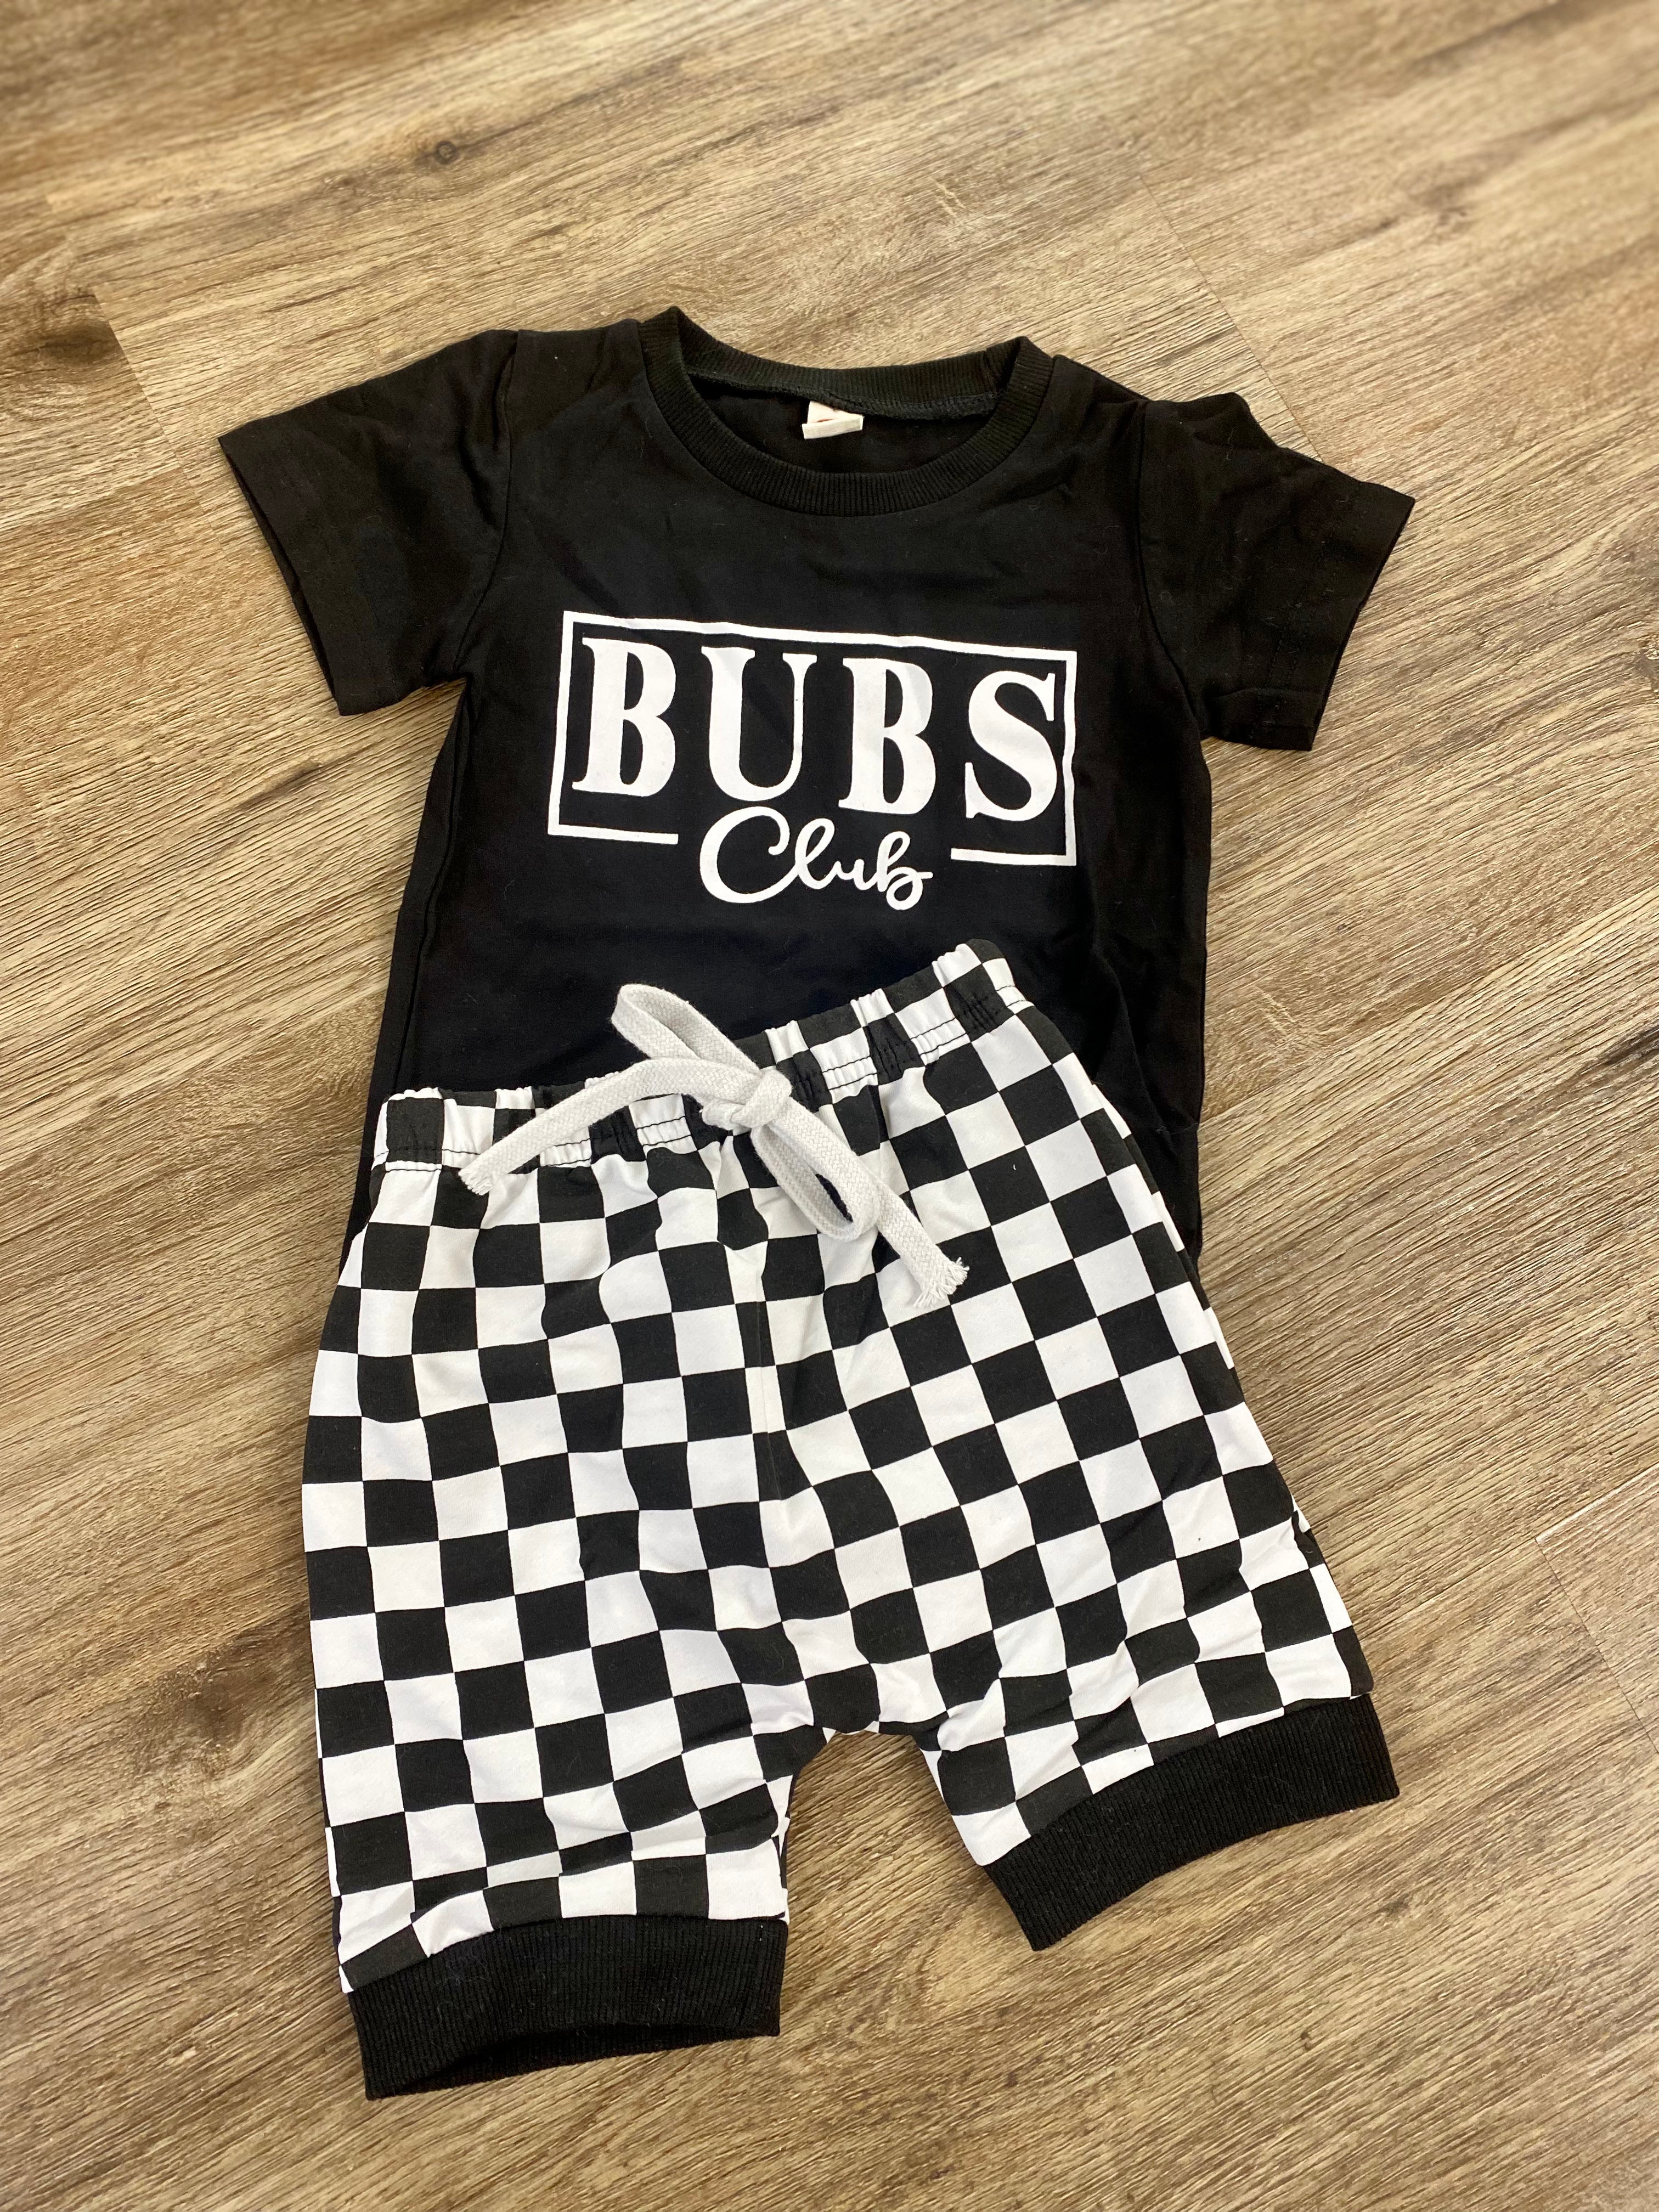 Bubs checkered pants set